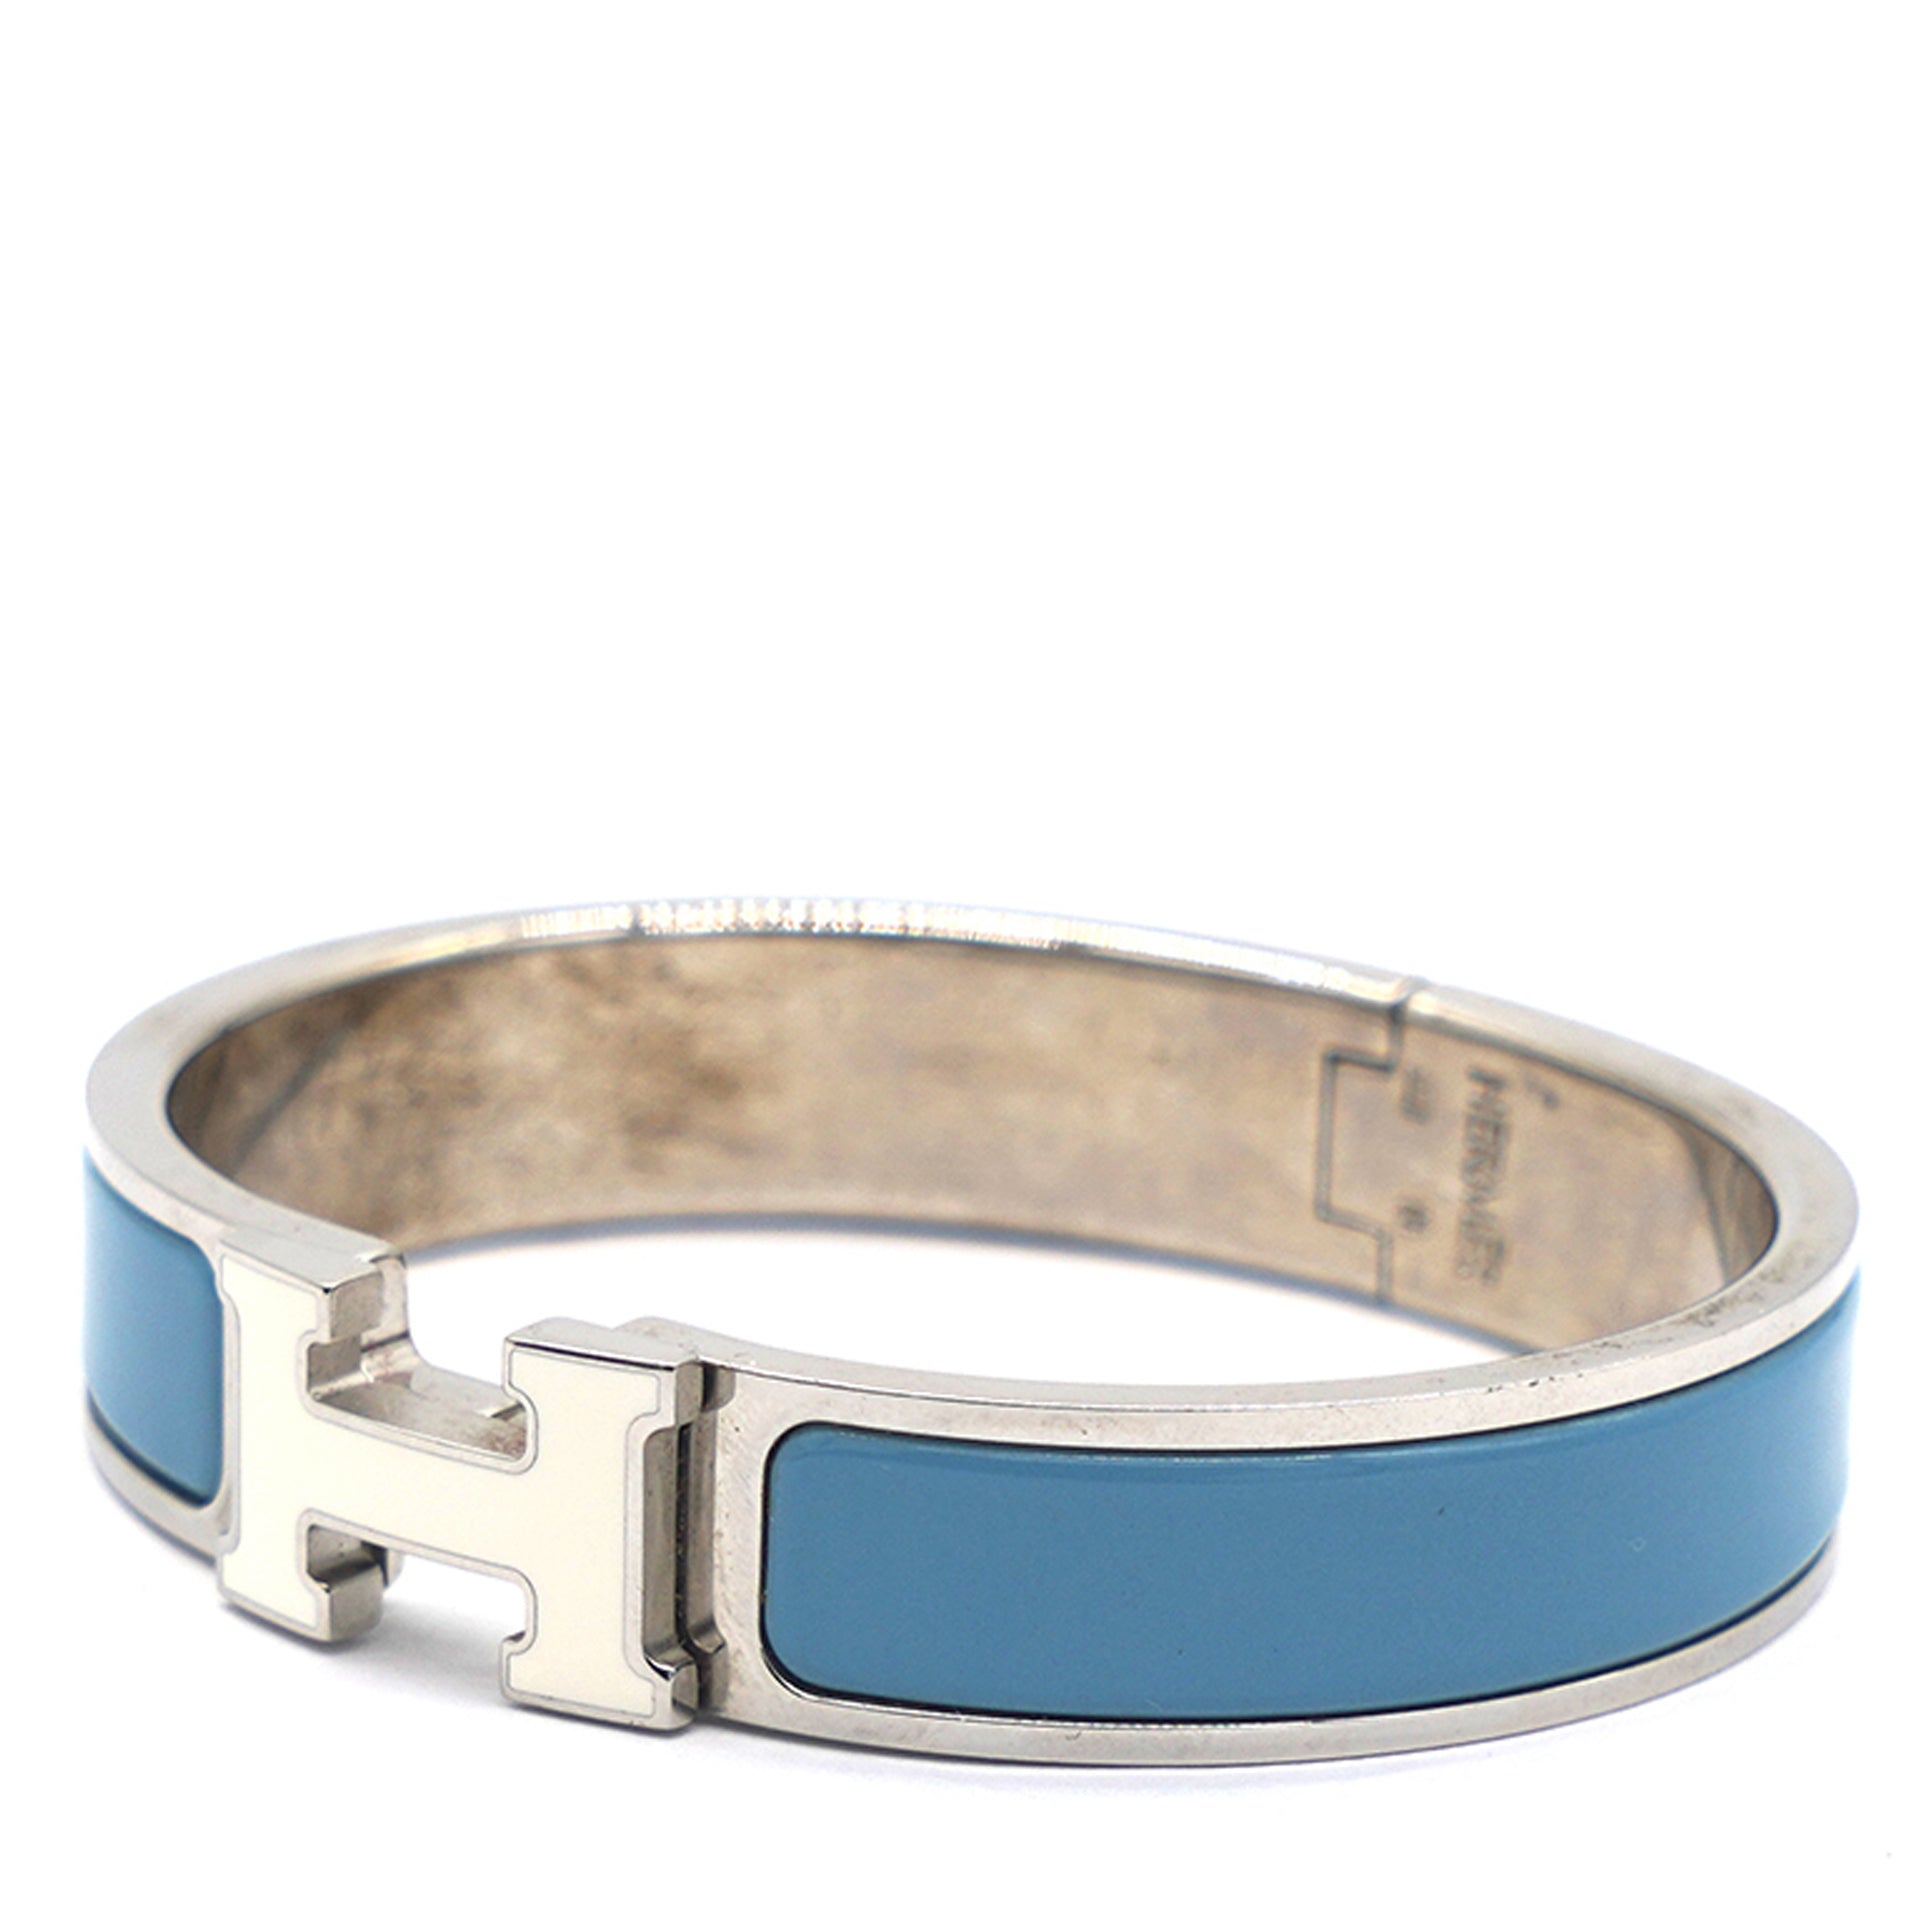 Clic Clac H Blue Silver palladium Bracelet